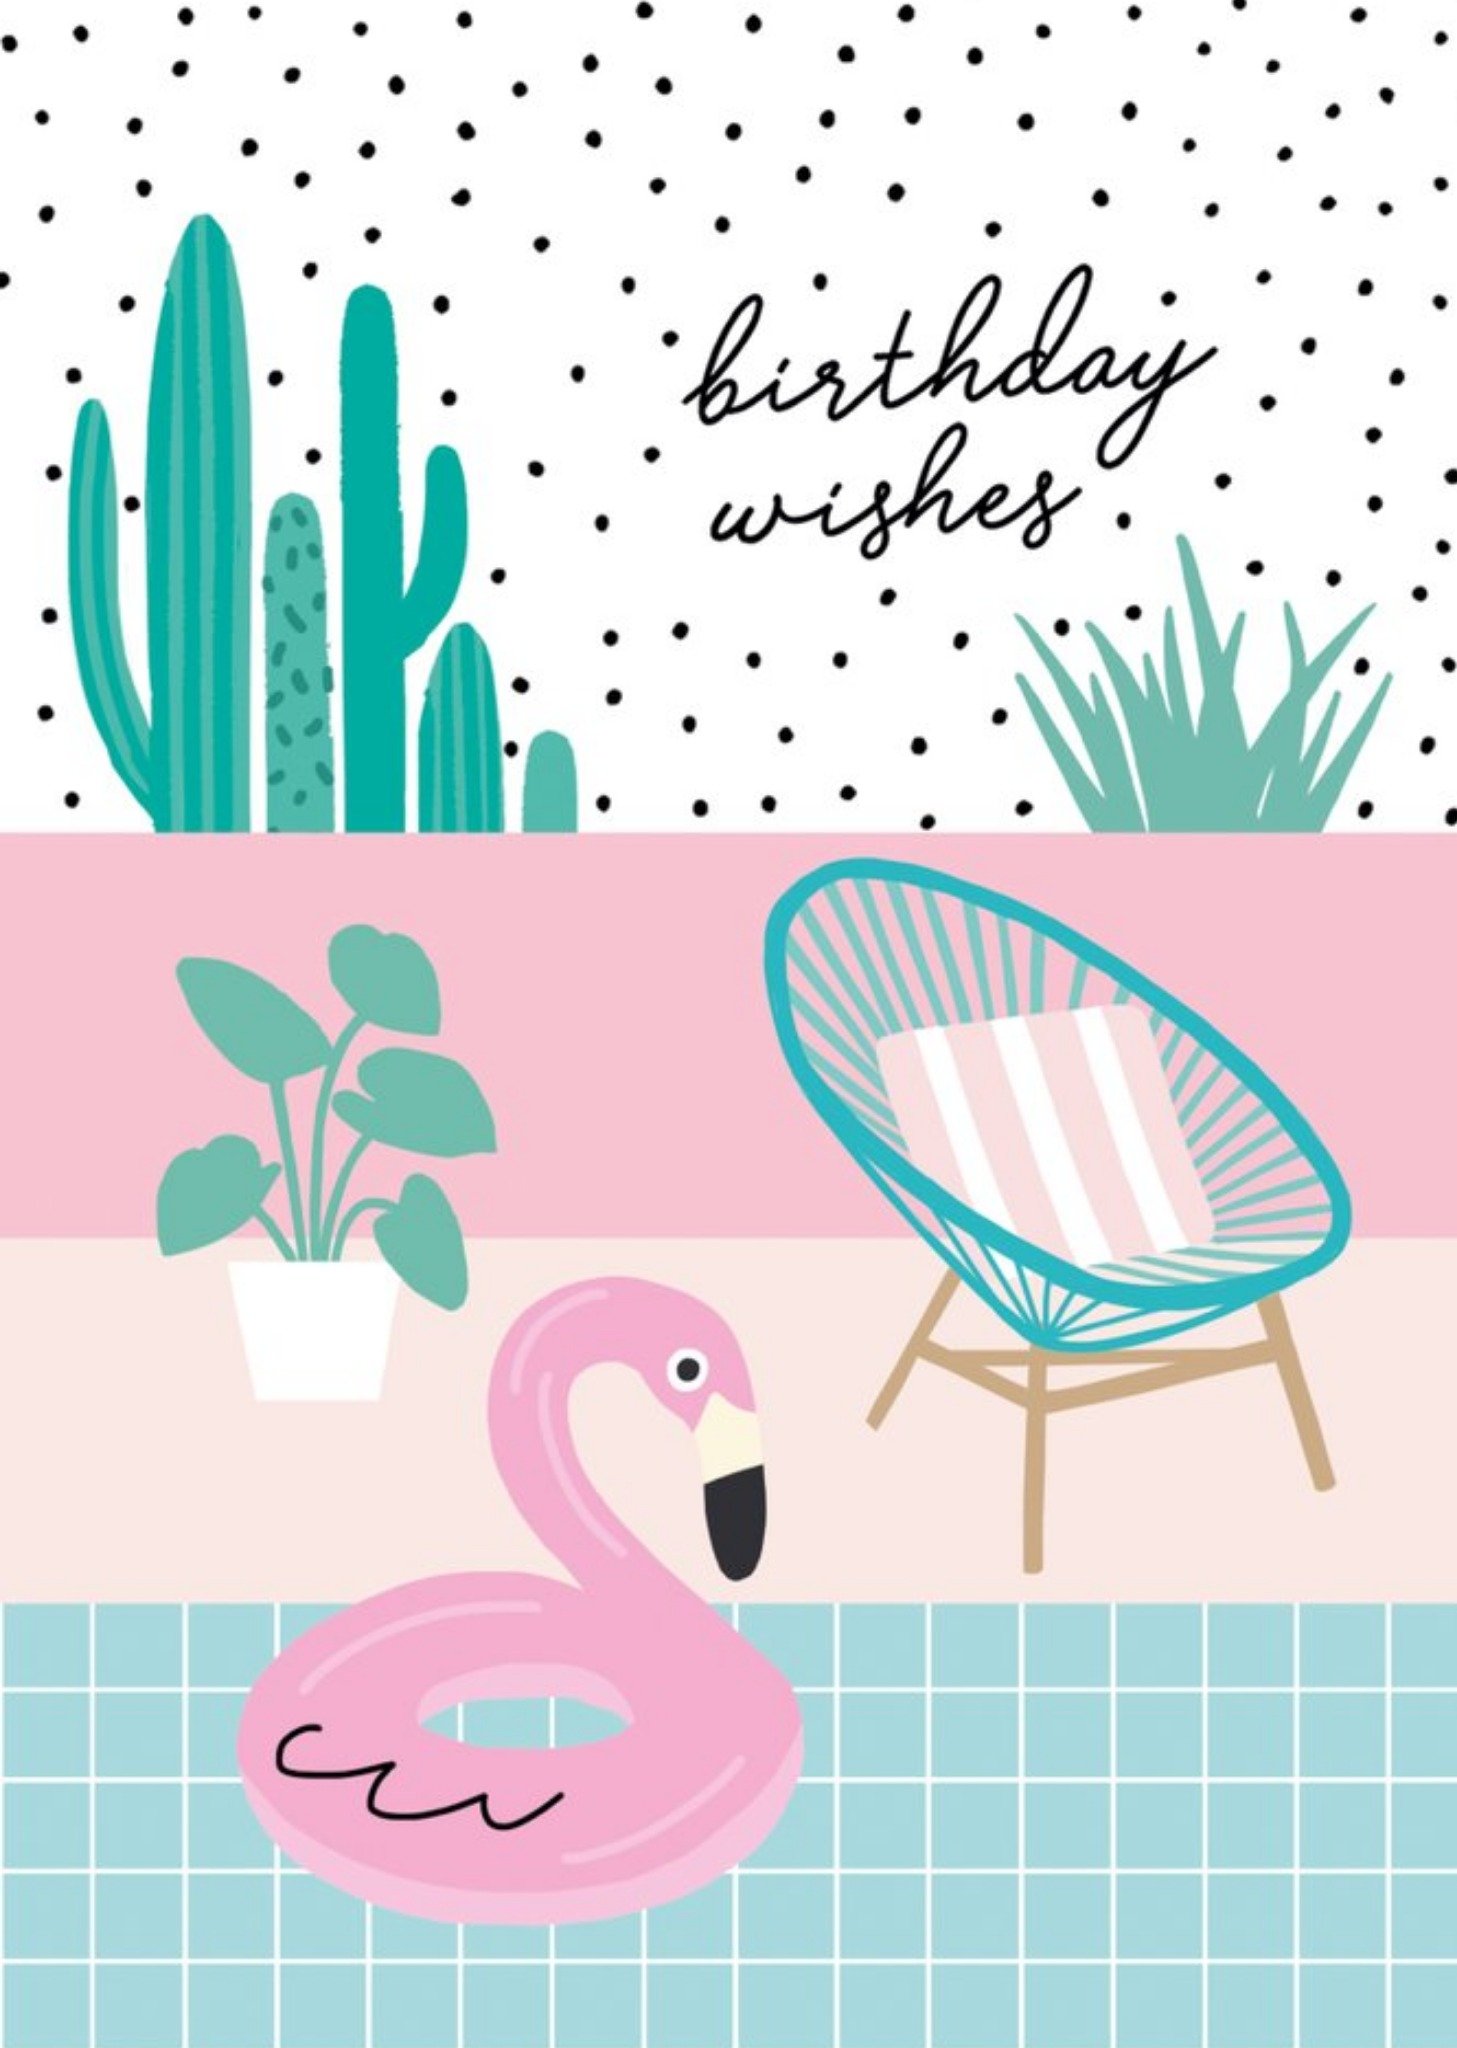 Moonpig Colourful Pool And Flamingo Birthday Wishes Card Ecard